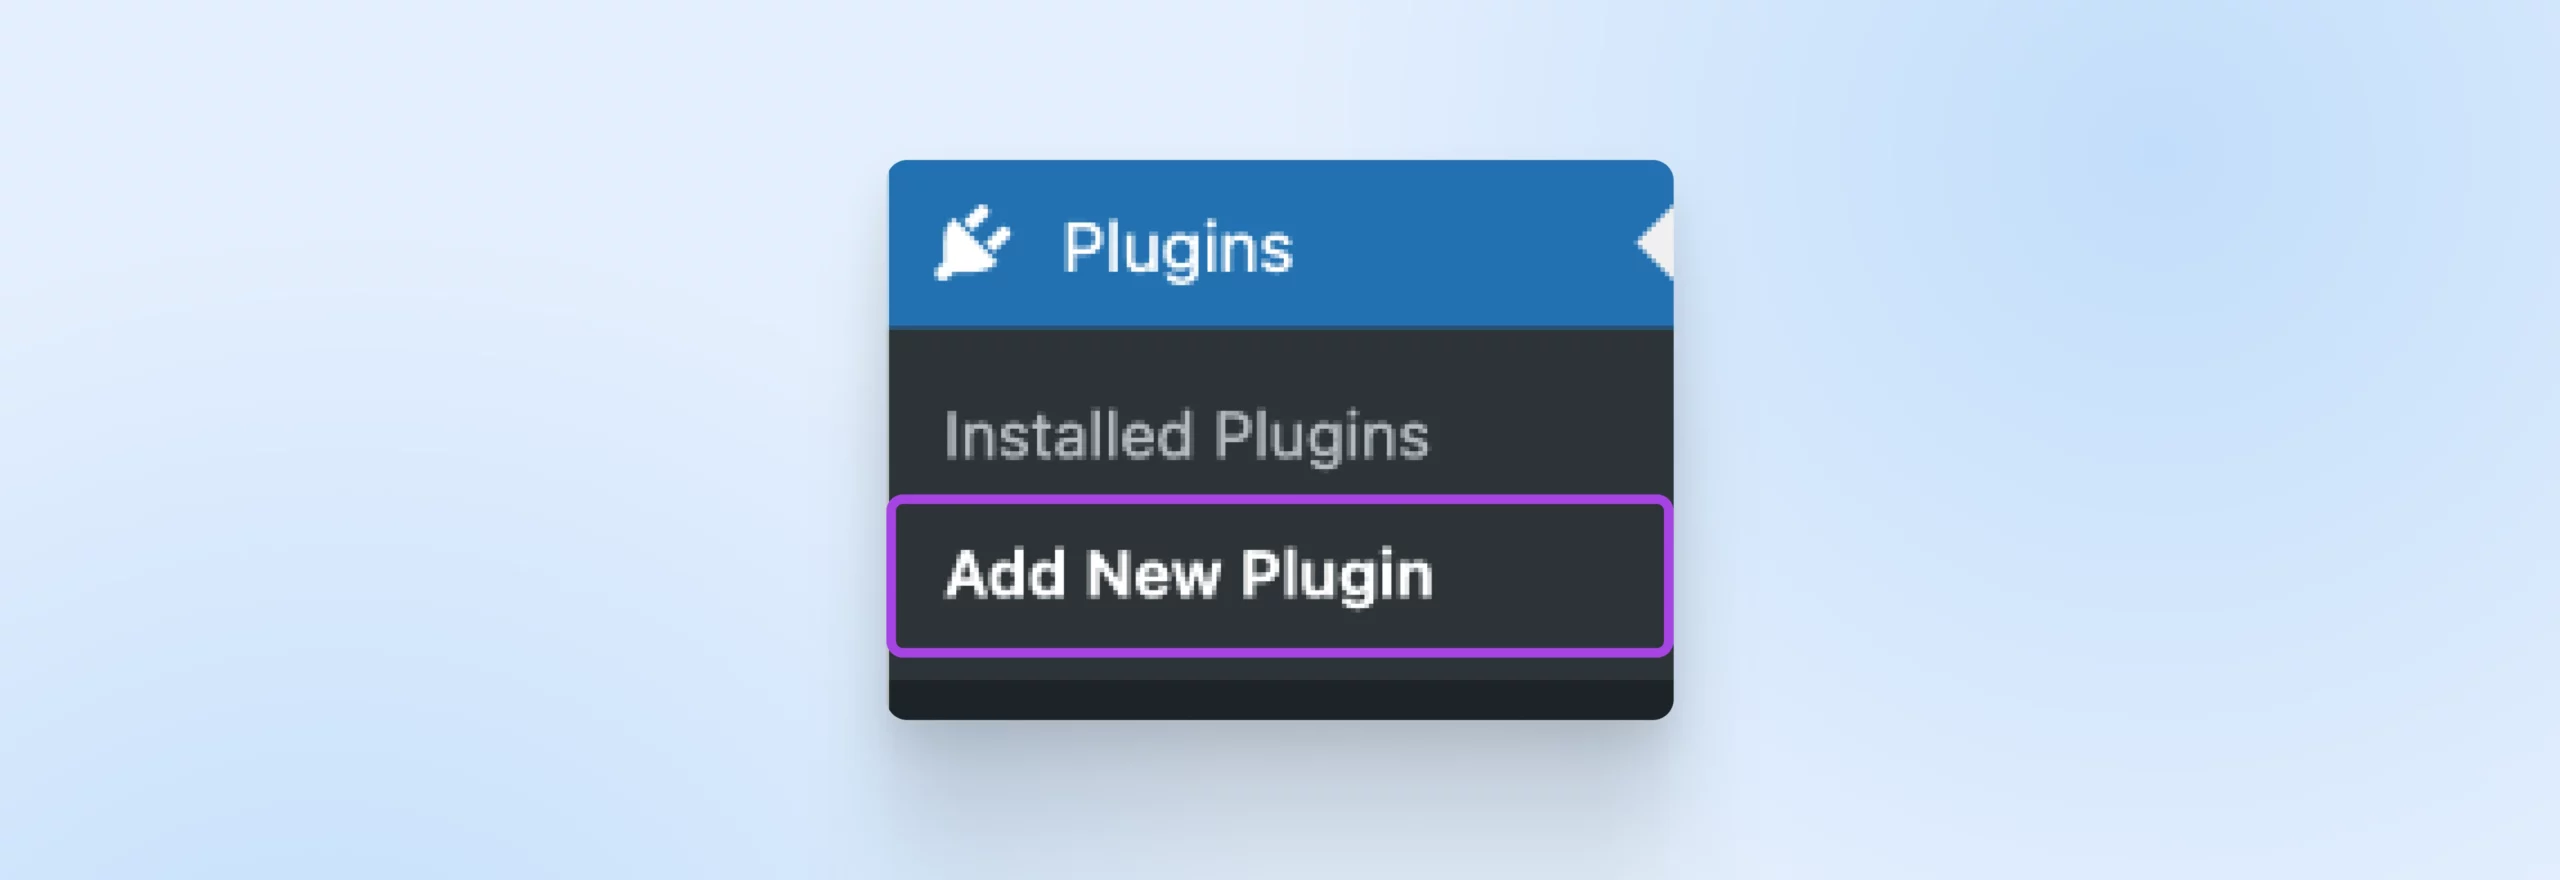 plugin nav showing Add New Plugin selected